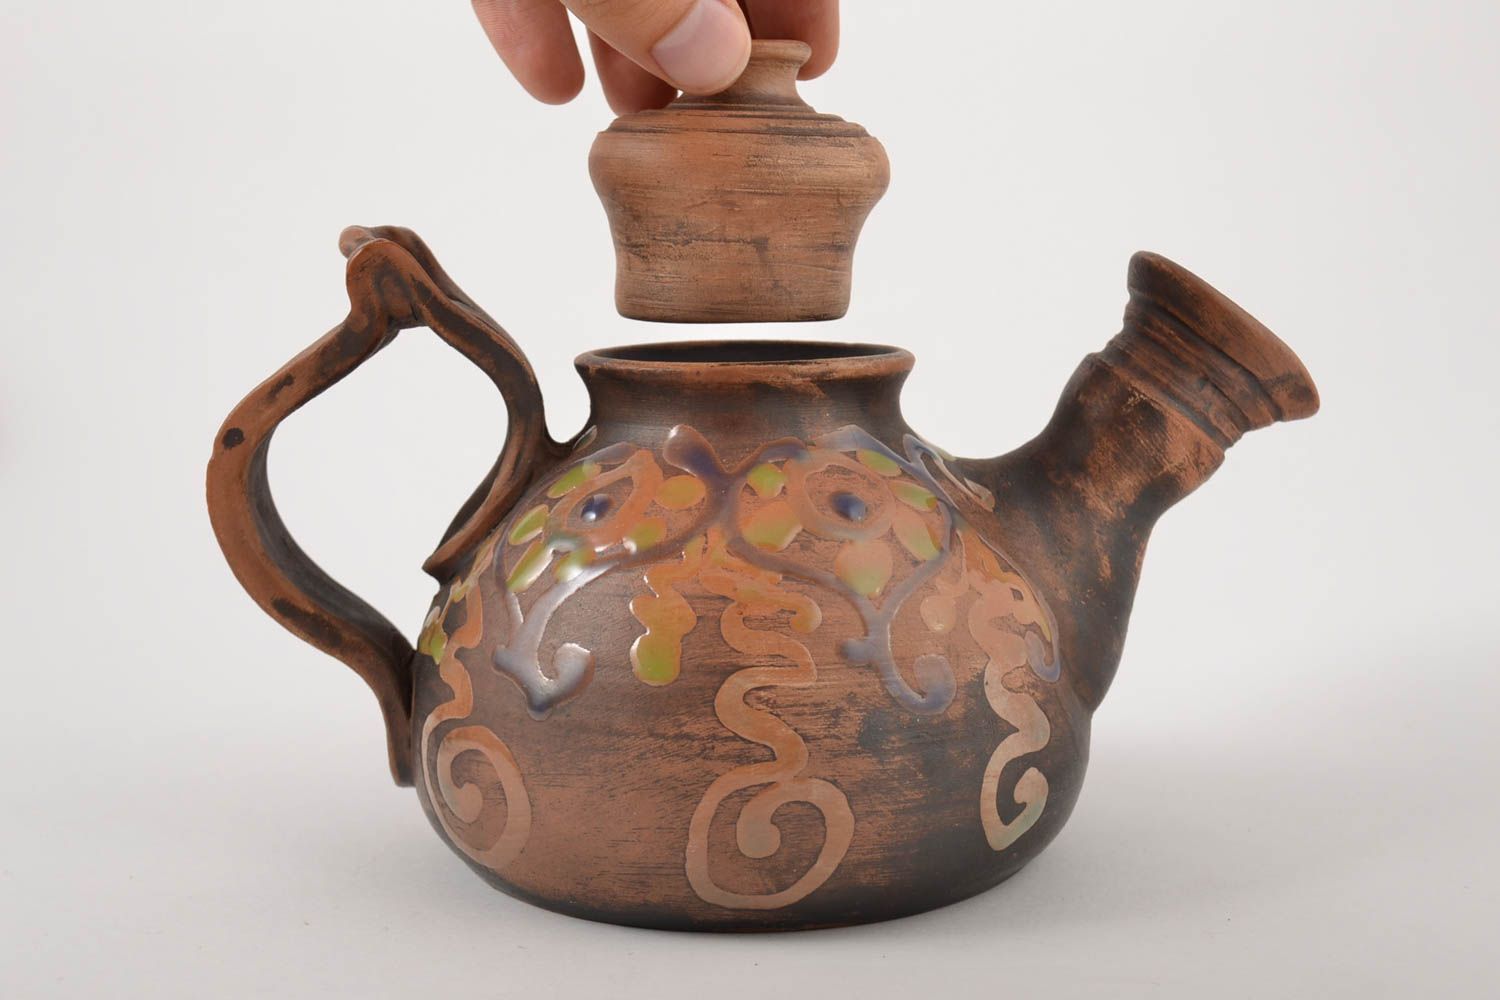 Beautiful handmade ceramic teapot designer clay teapot pottery works table decor photo 5